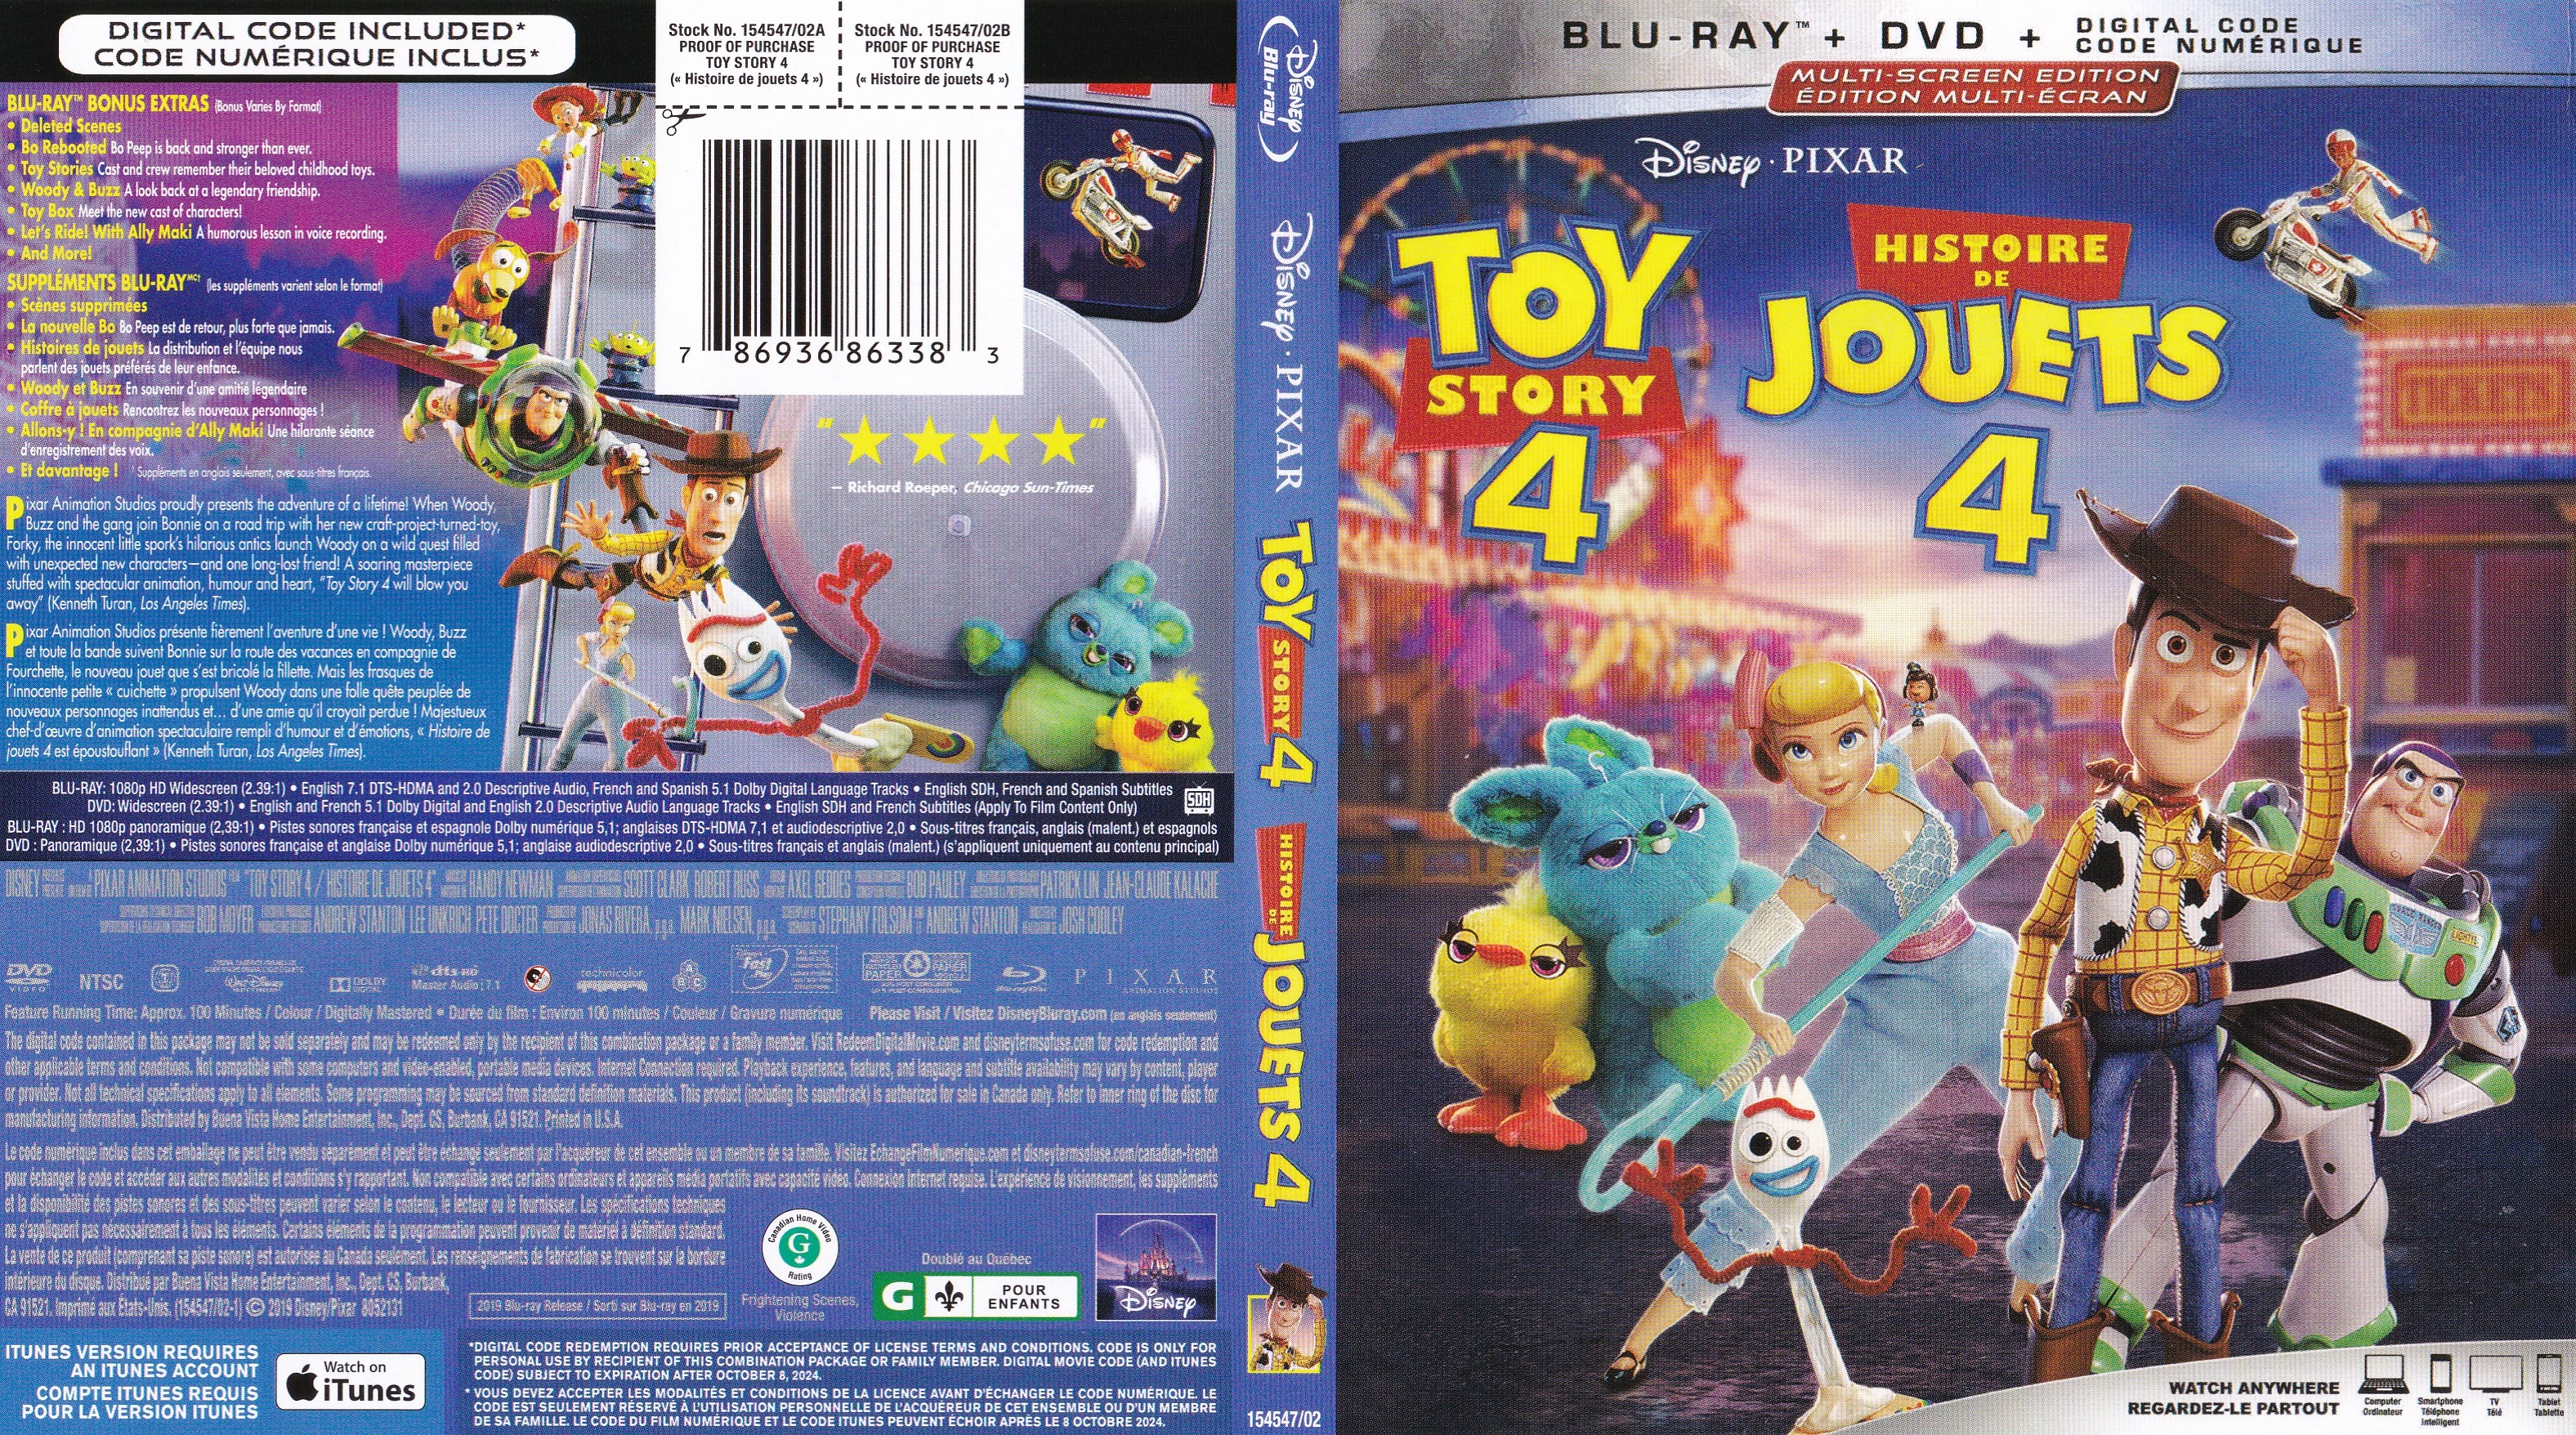 Jaquette DVD Histoire de jouet 4 - Toy story 4 (canadienne) (BLU-RAY)